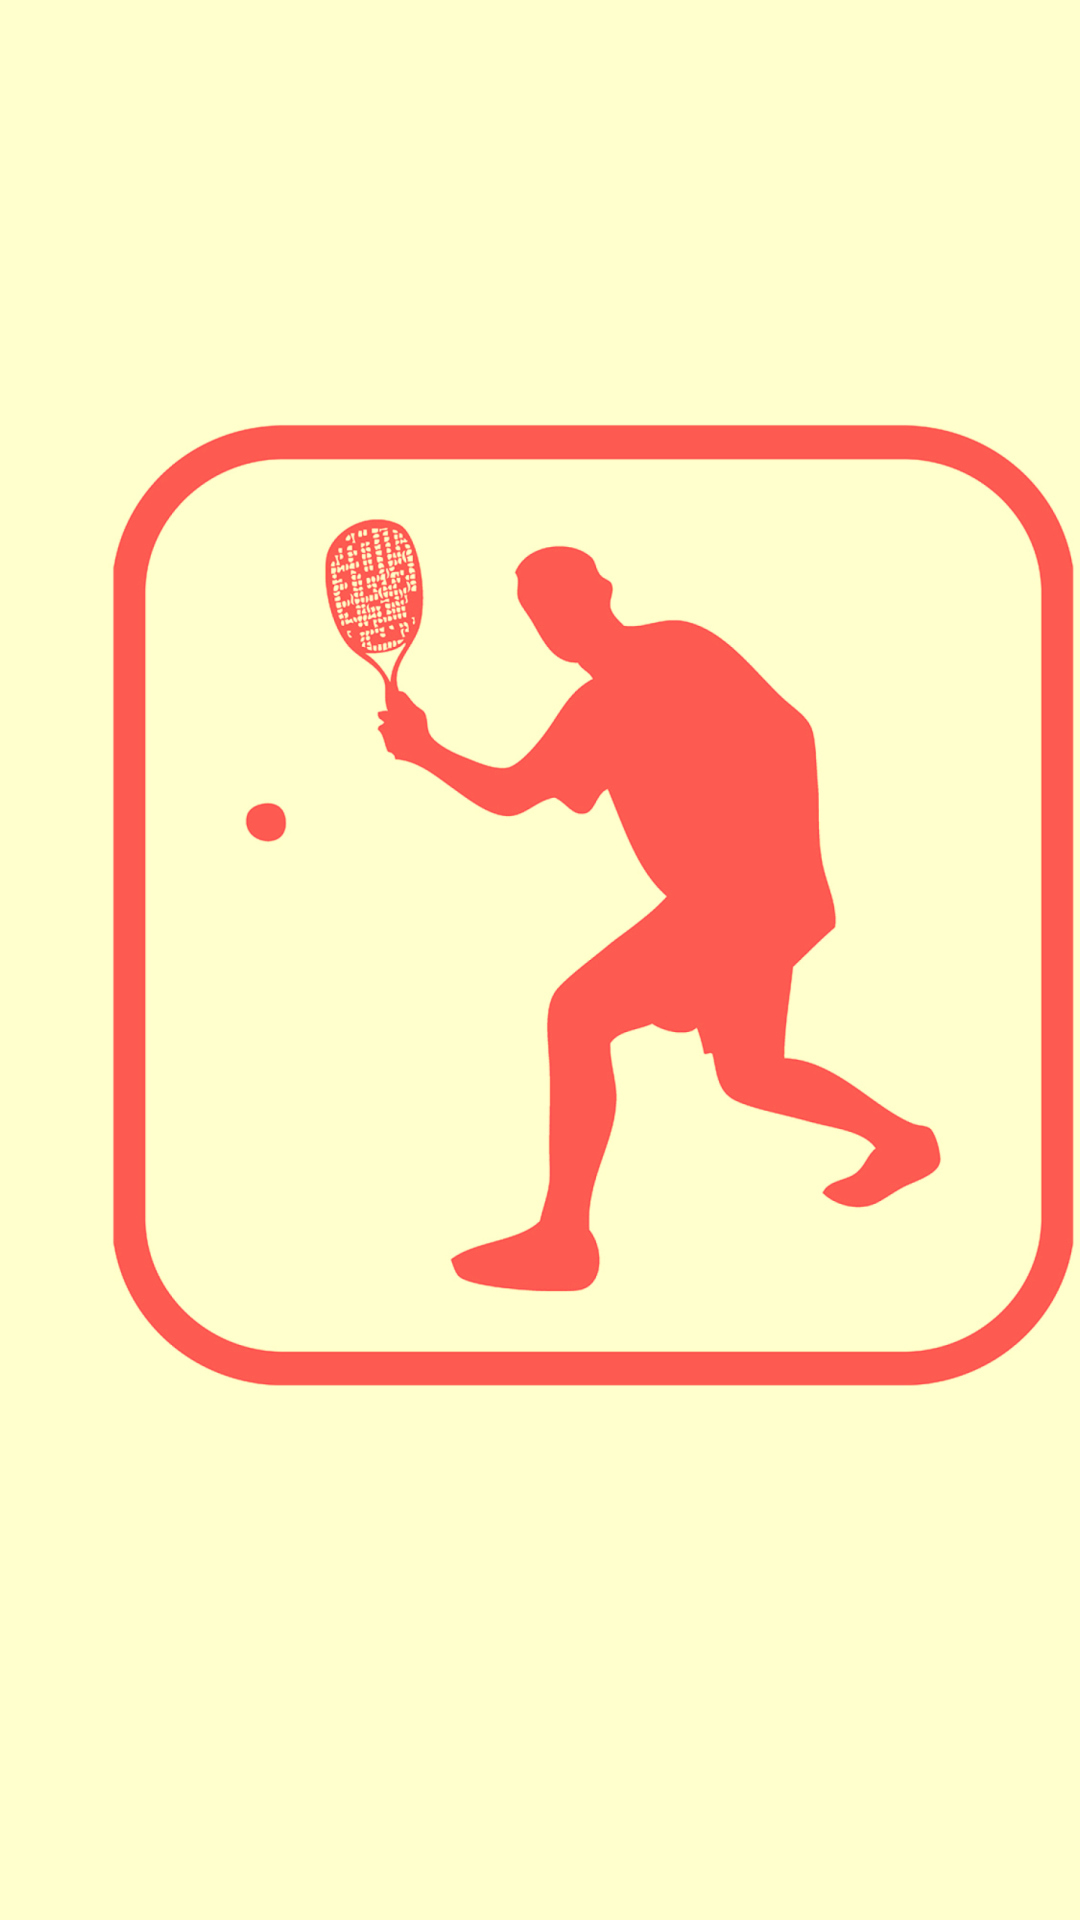 Das Squash Game Logo Wallpaper 1080x1920